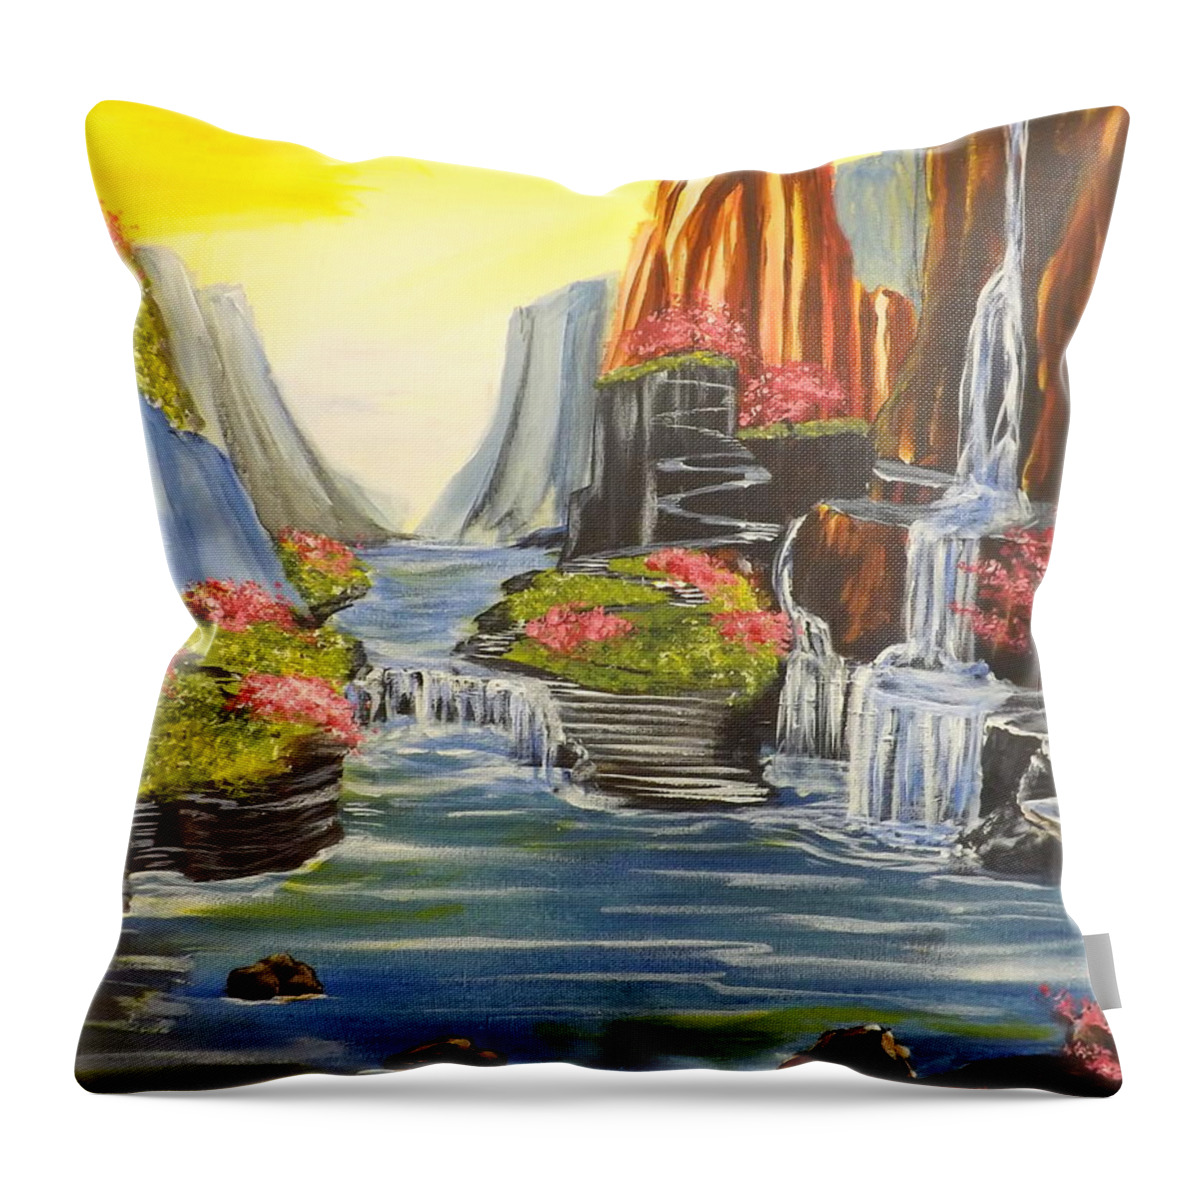 A River Runs Through It Throw Pillow featuring the painting A River Runs Through It by Darren Robinson